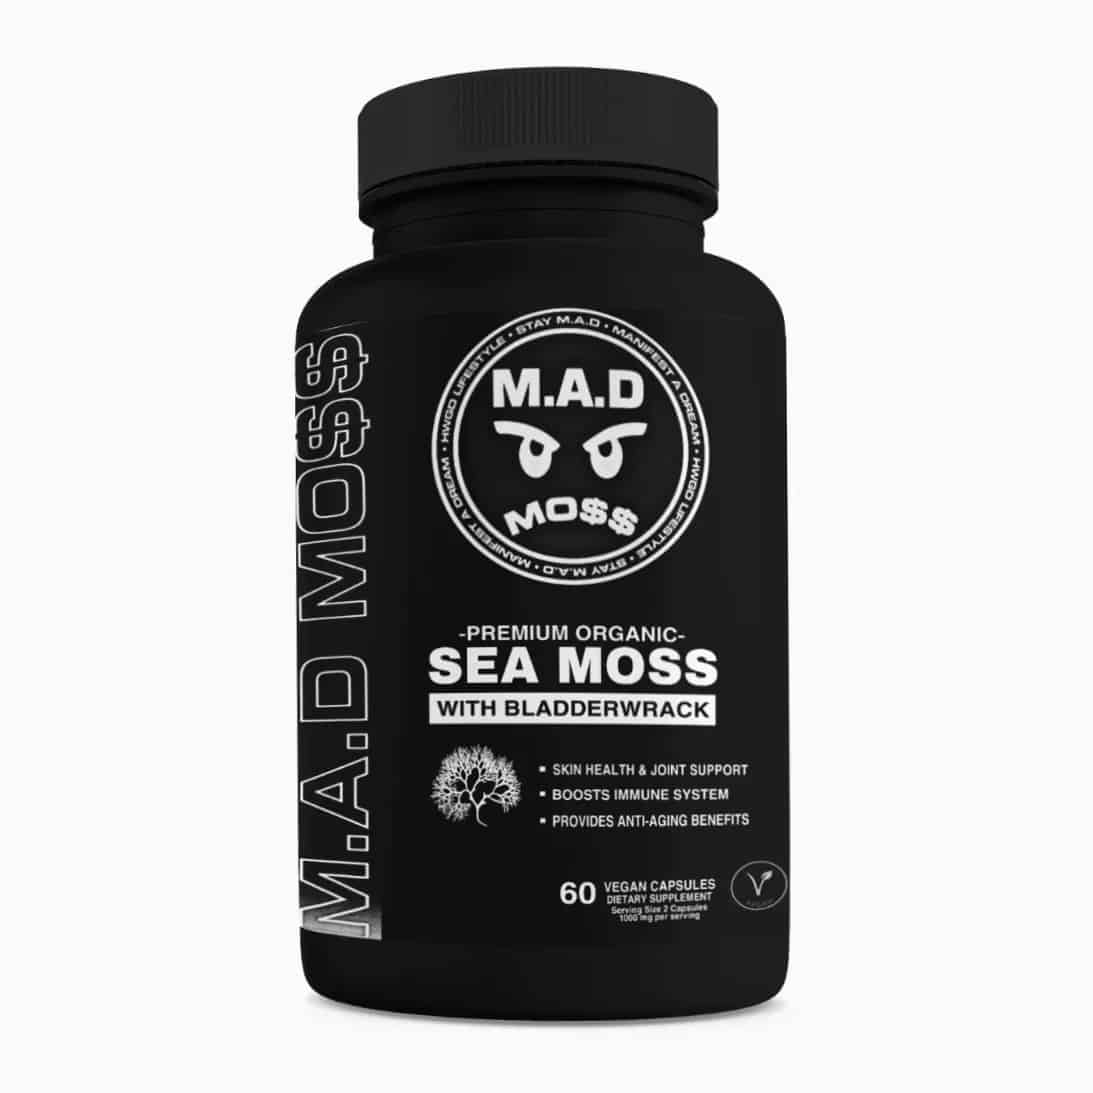 Premium Organic Sea Moss with Bladderwrack